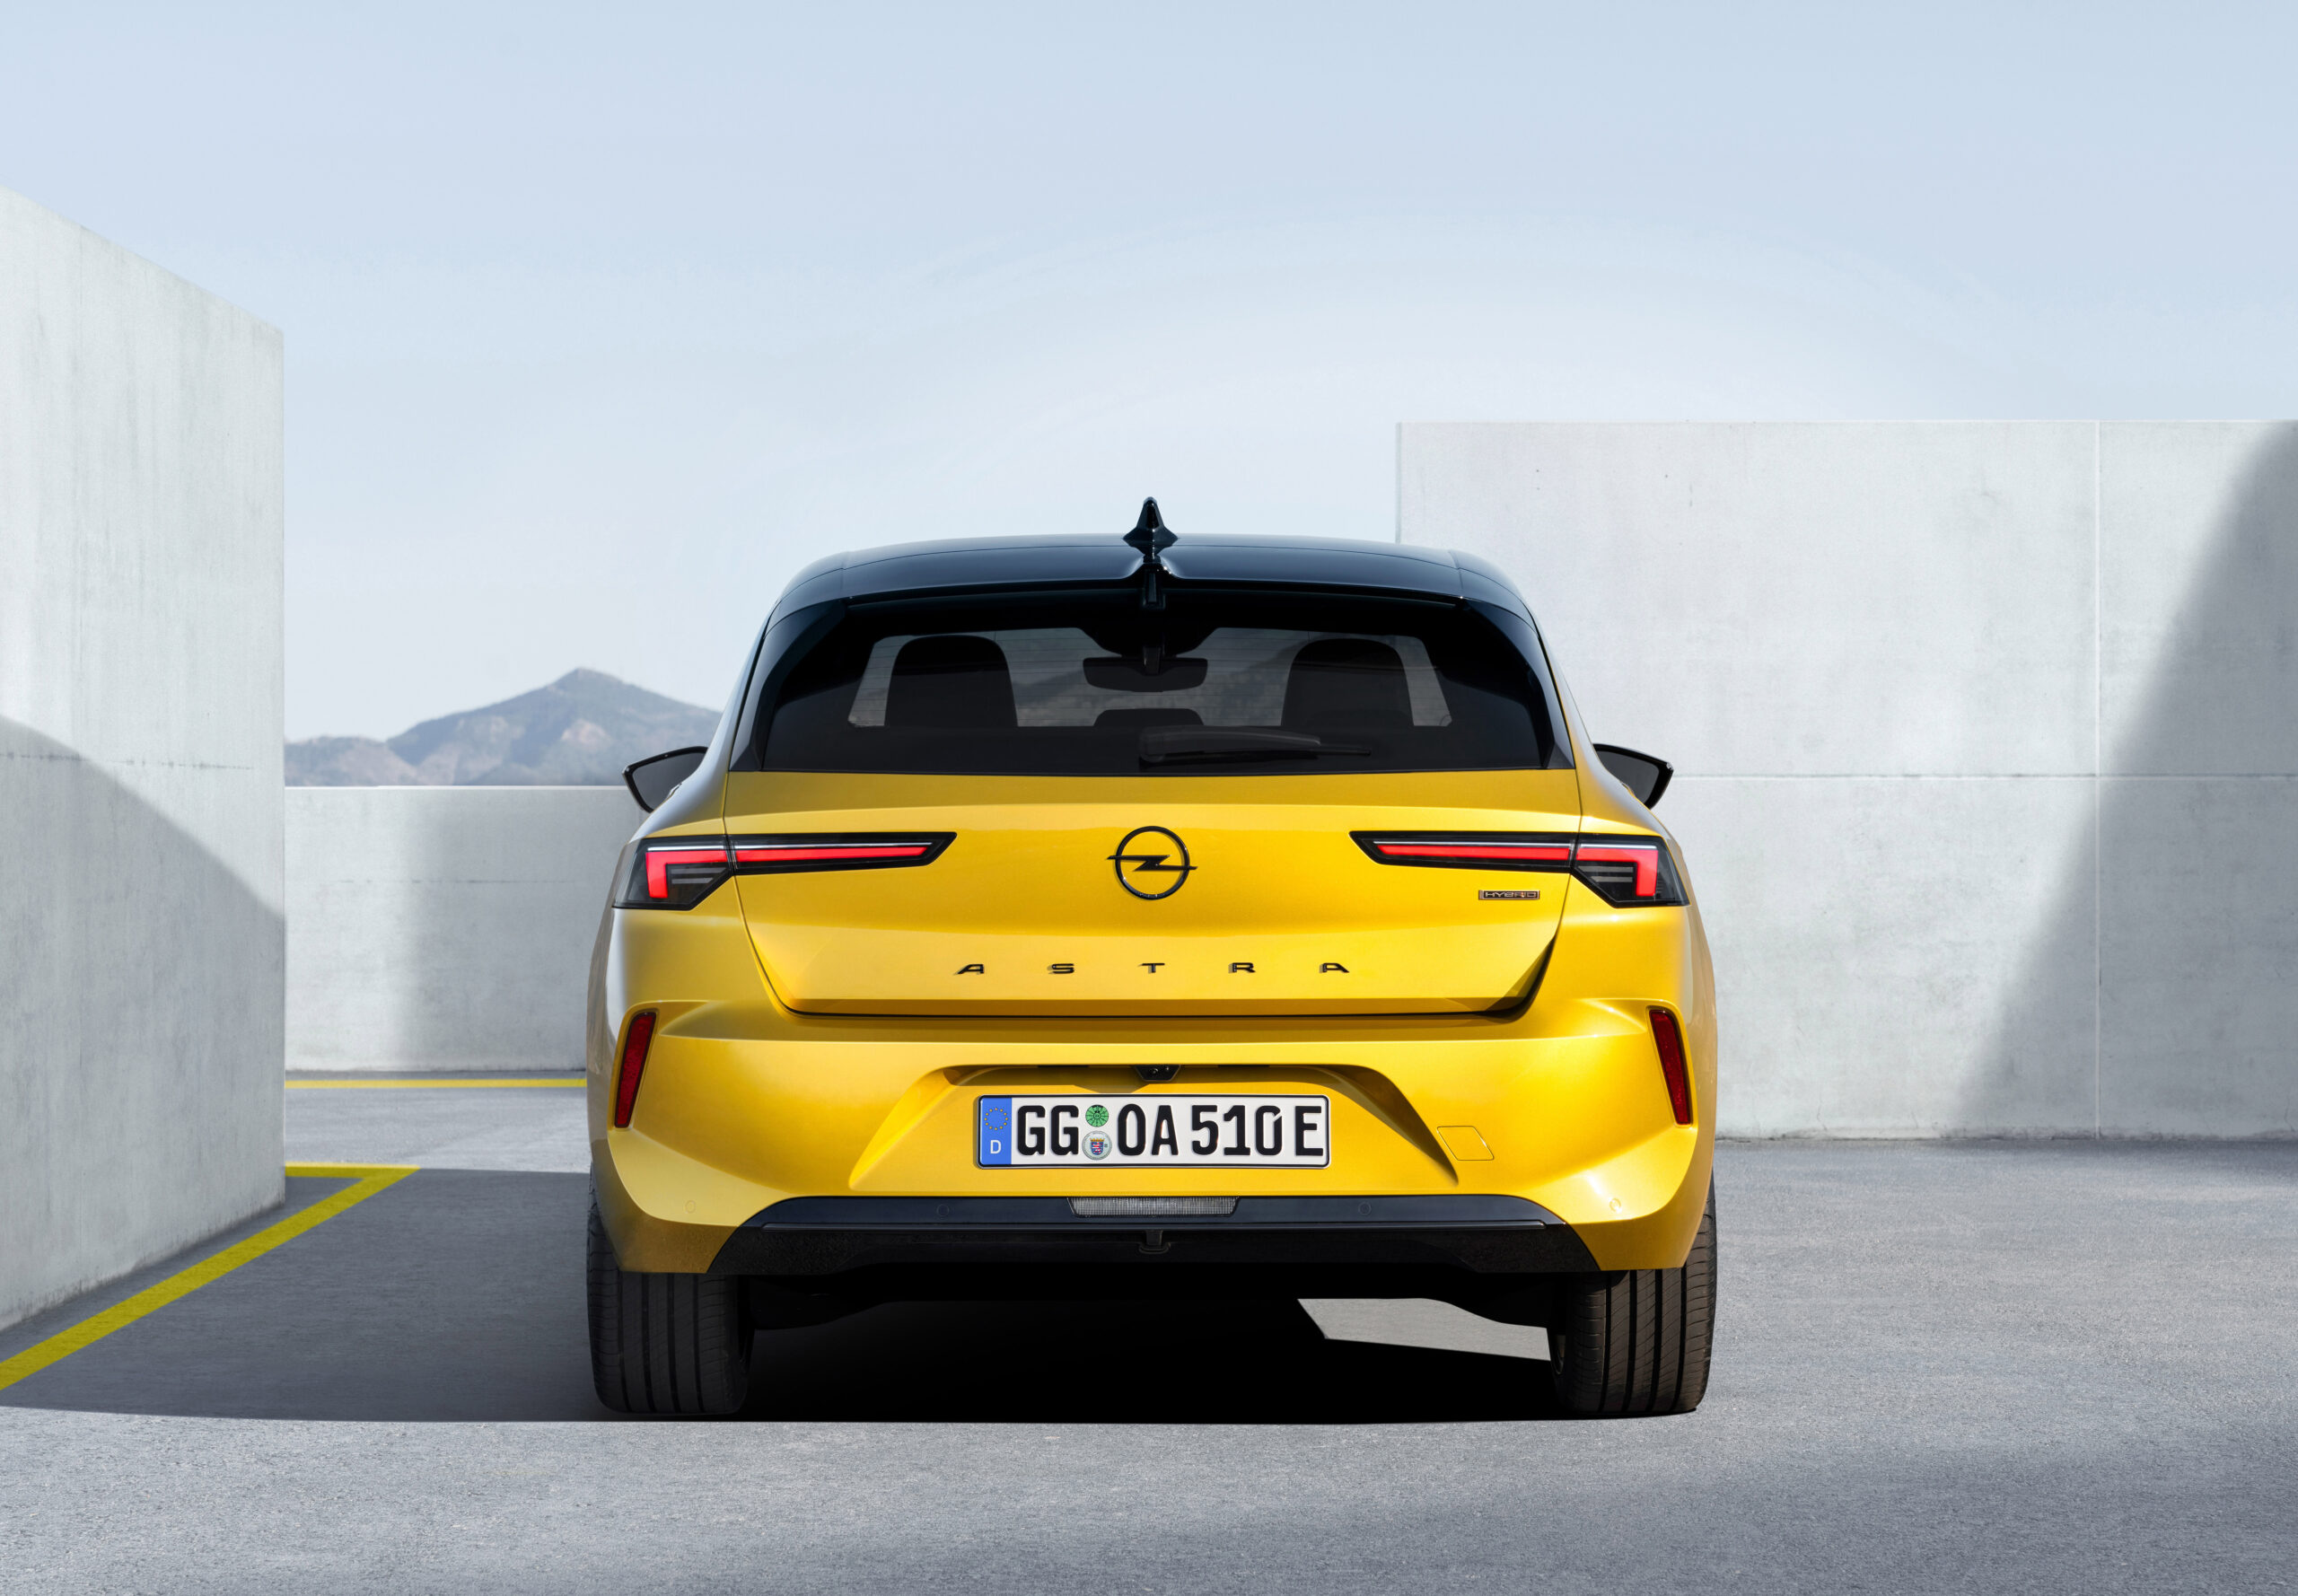 Oto nowy Opel Astra 2022